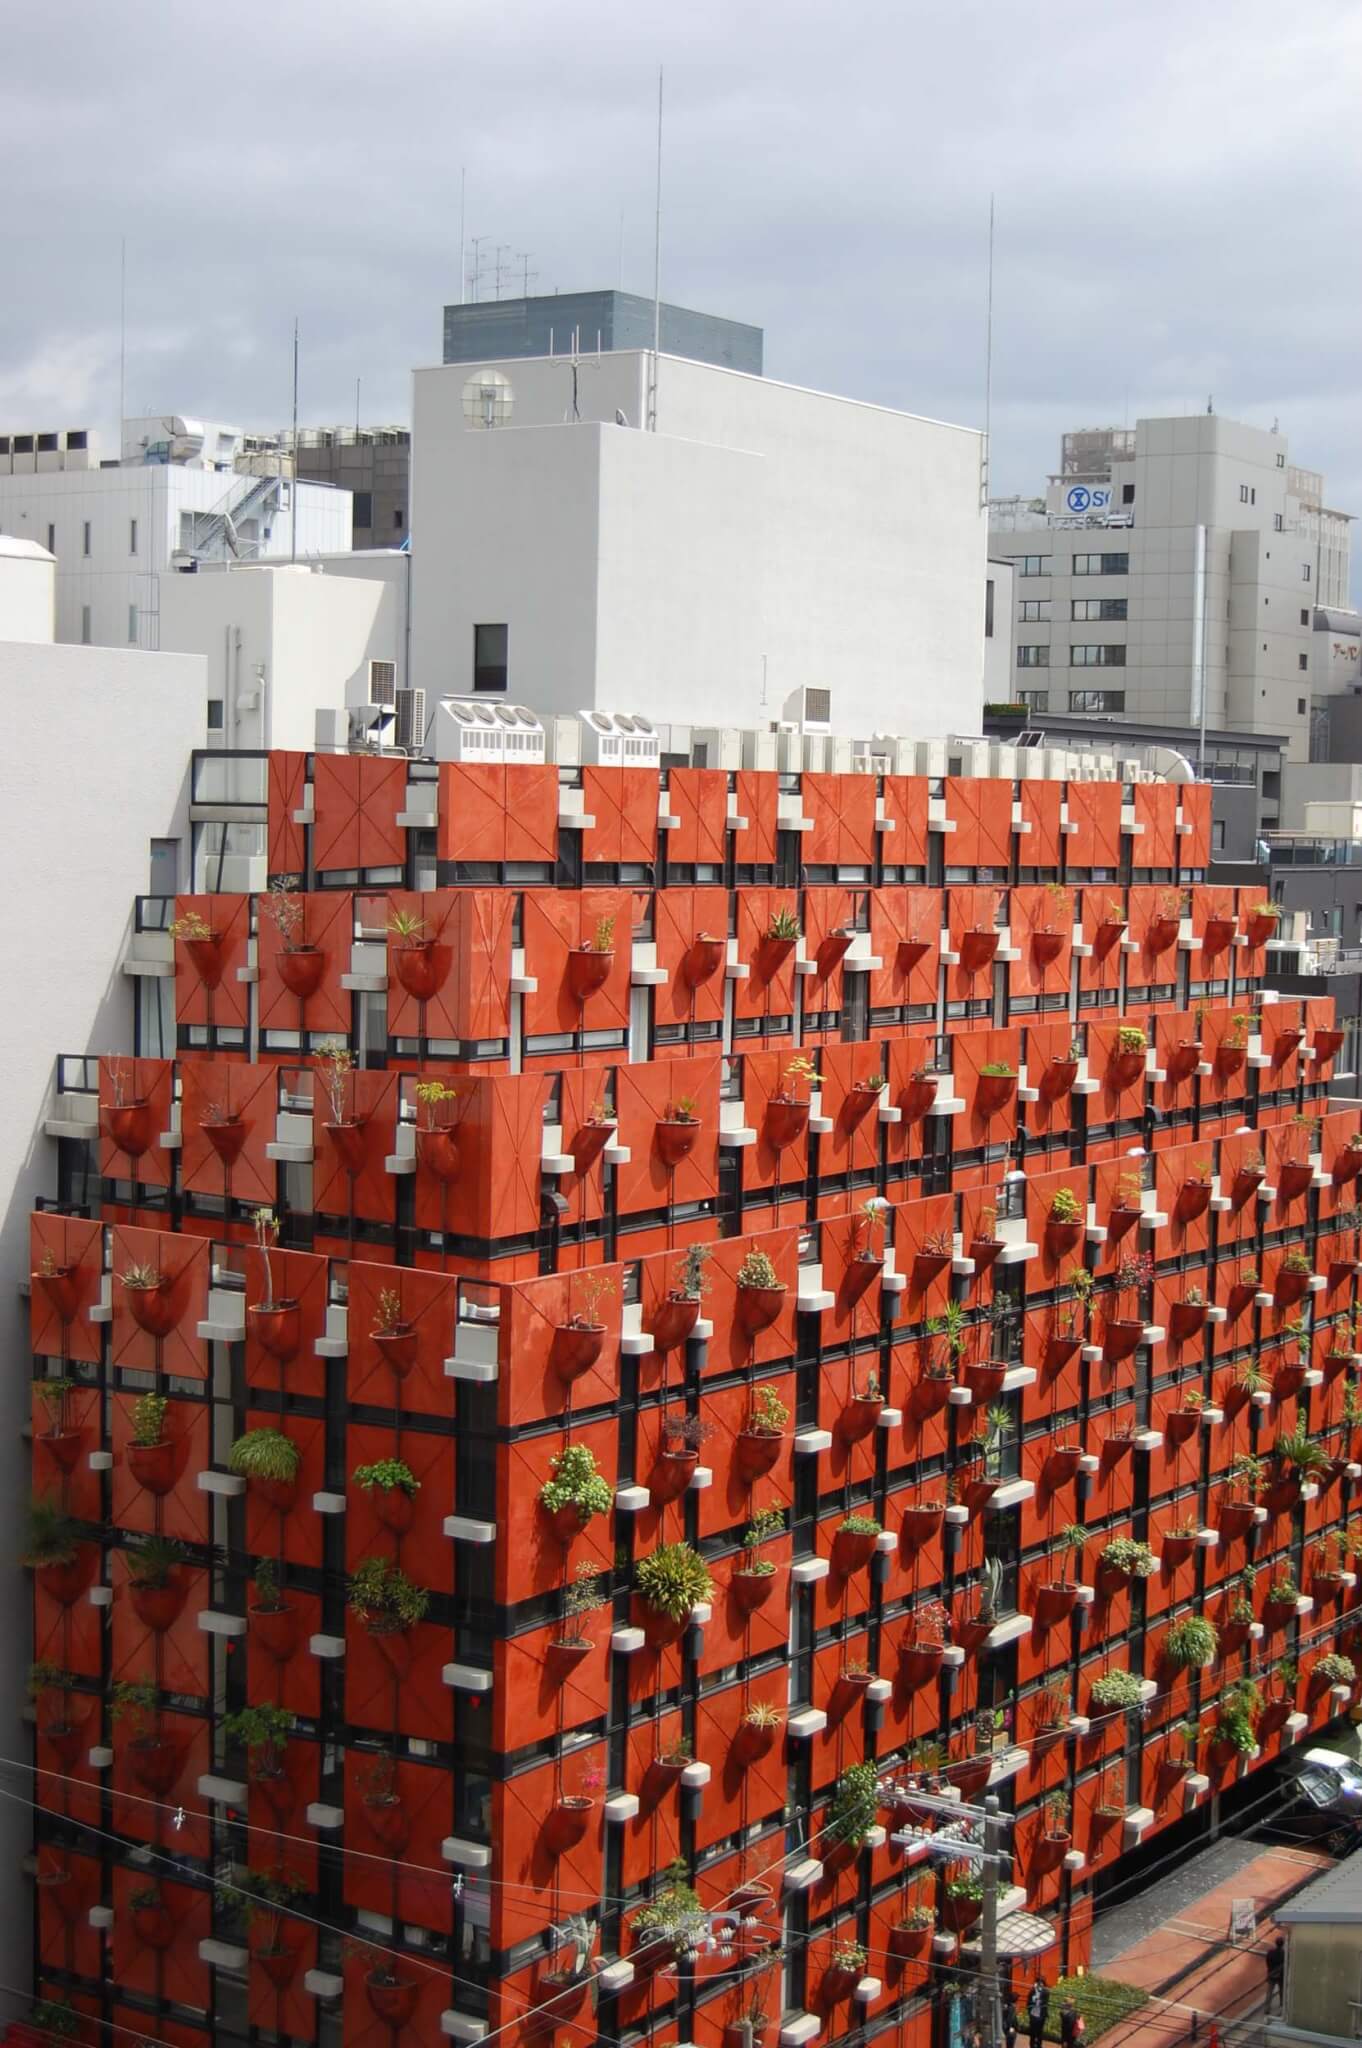 Organic Building of Osaka in Japan by Gaetano Pesce